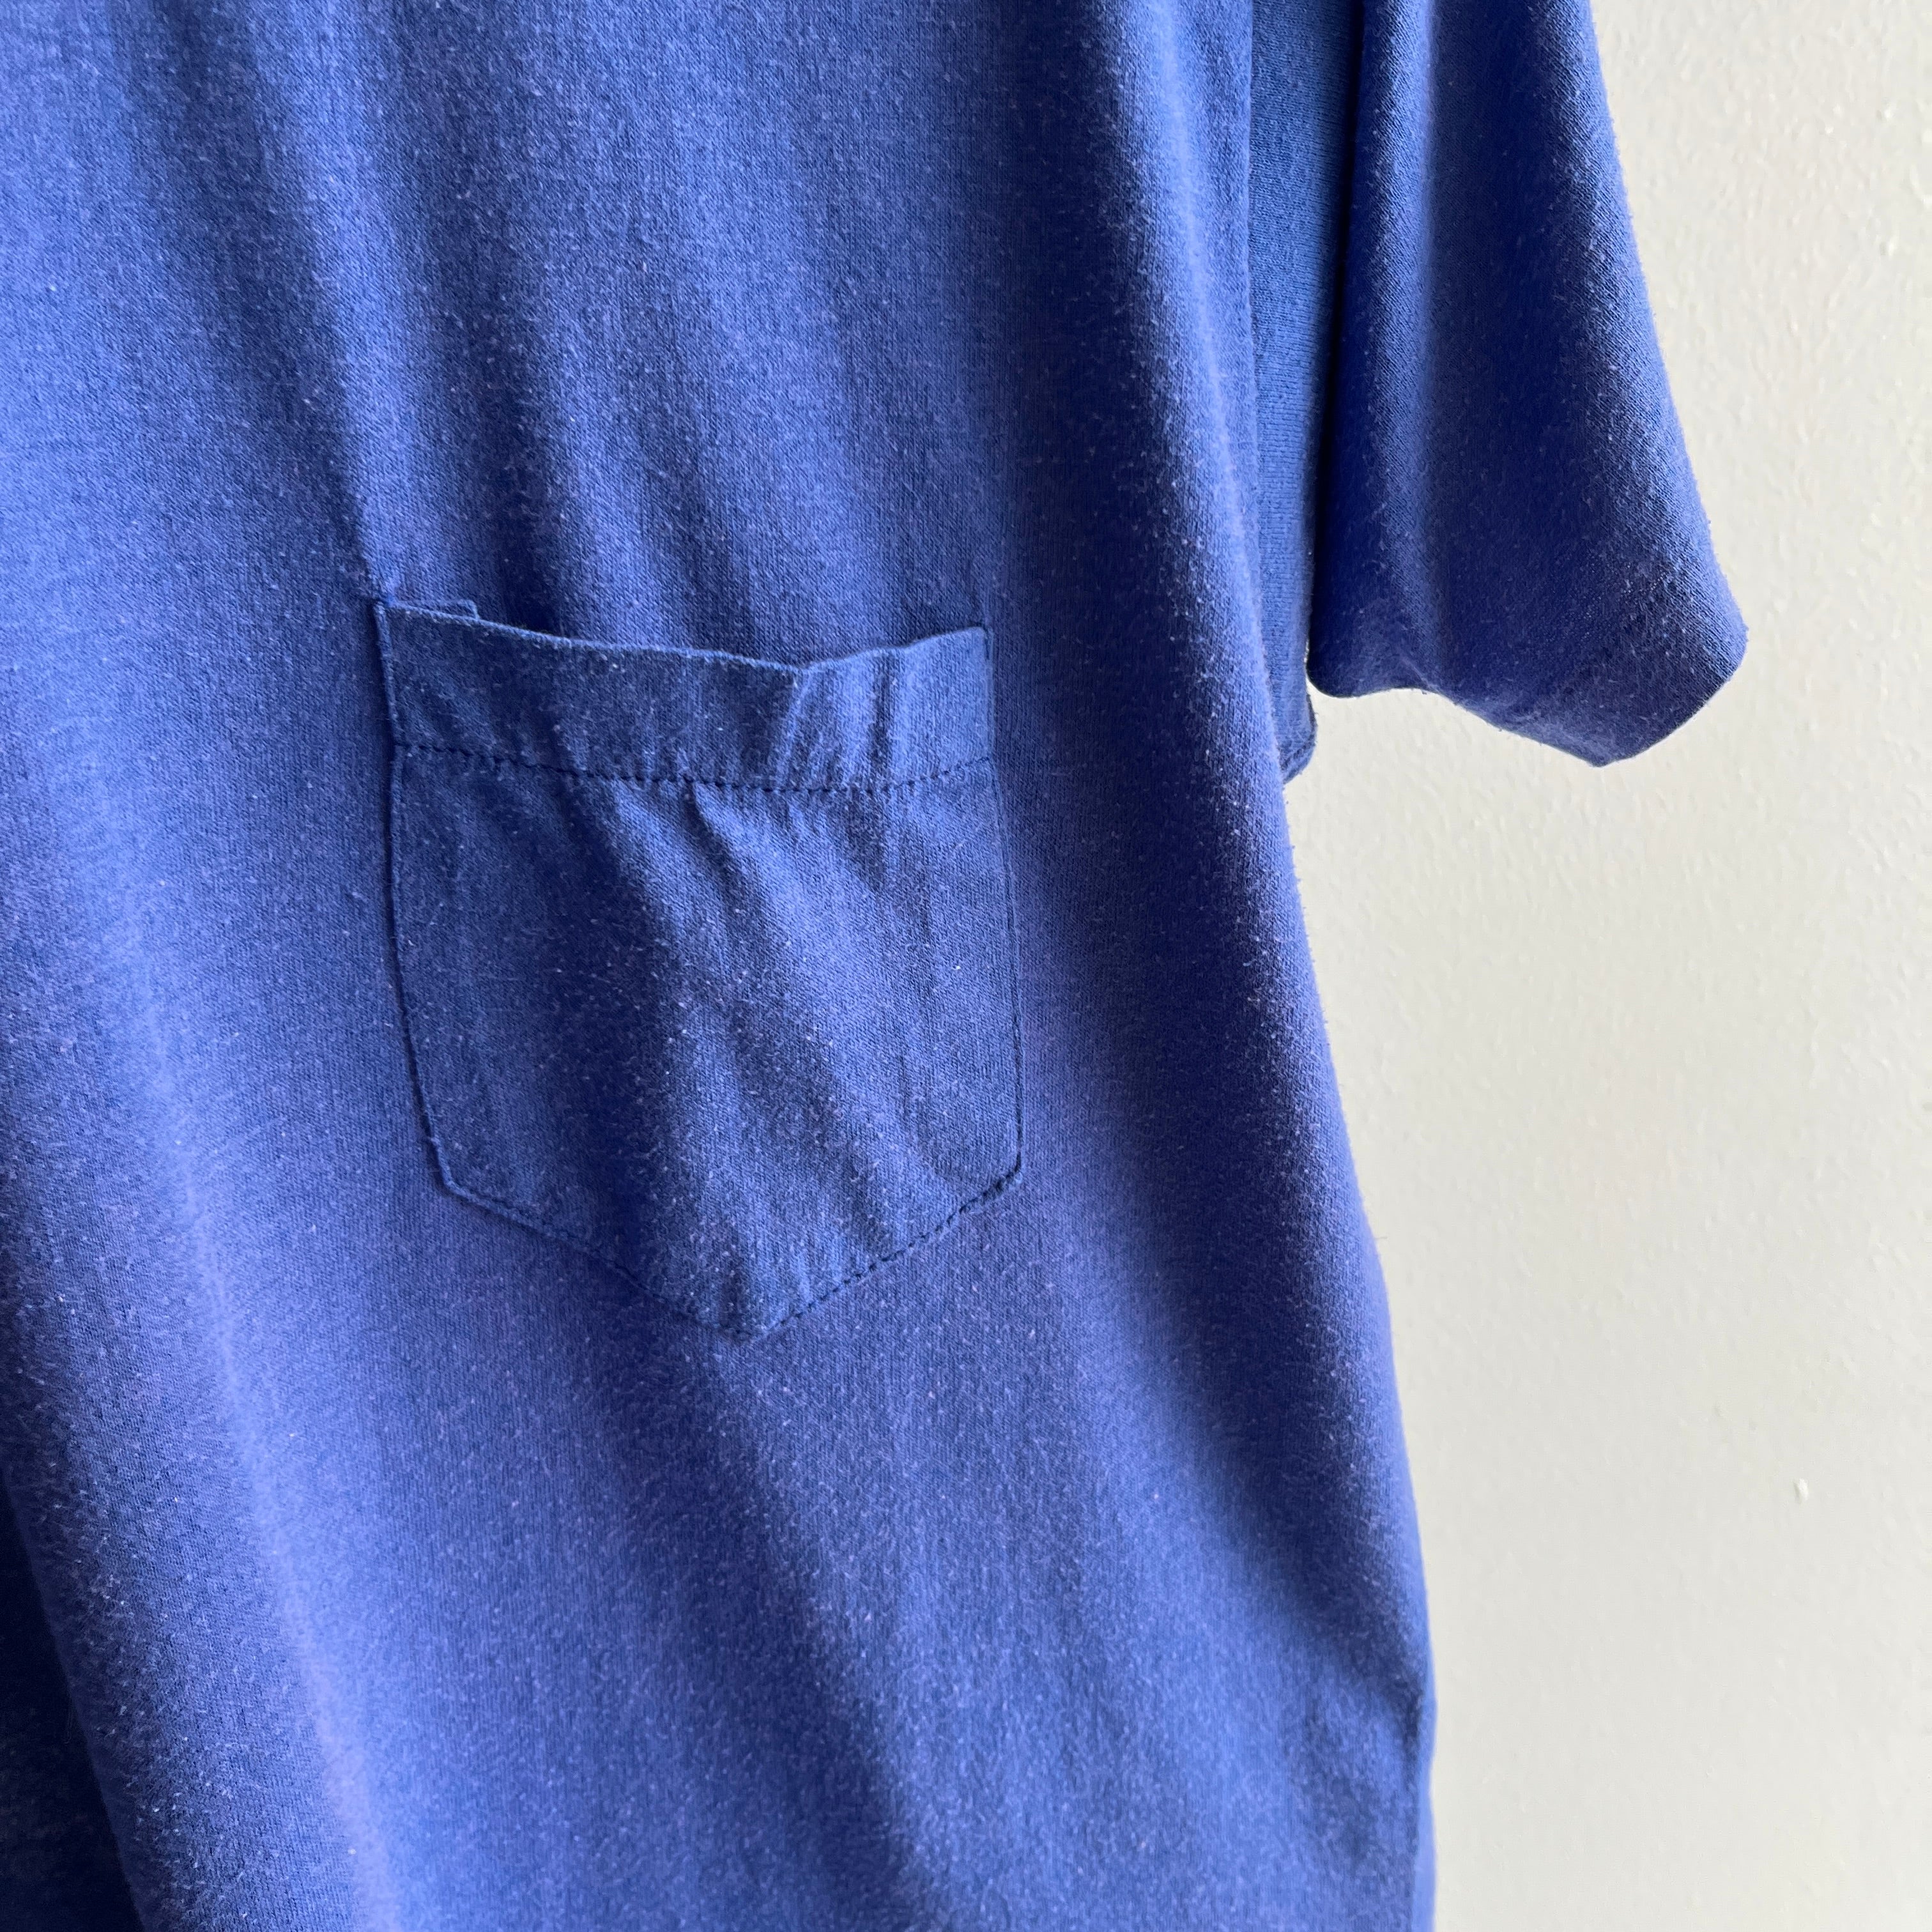 1980s Classic Royal Blue Triangle Pocket T-Shirt